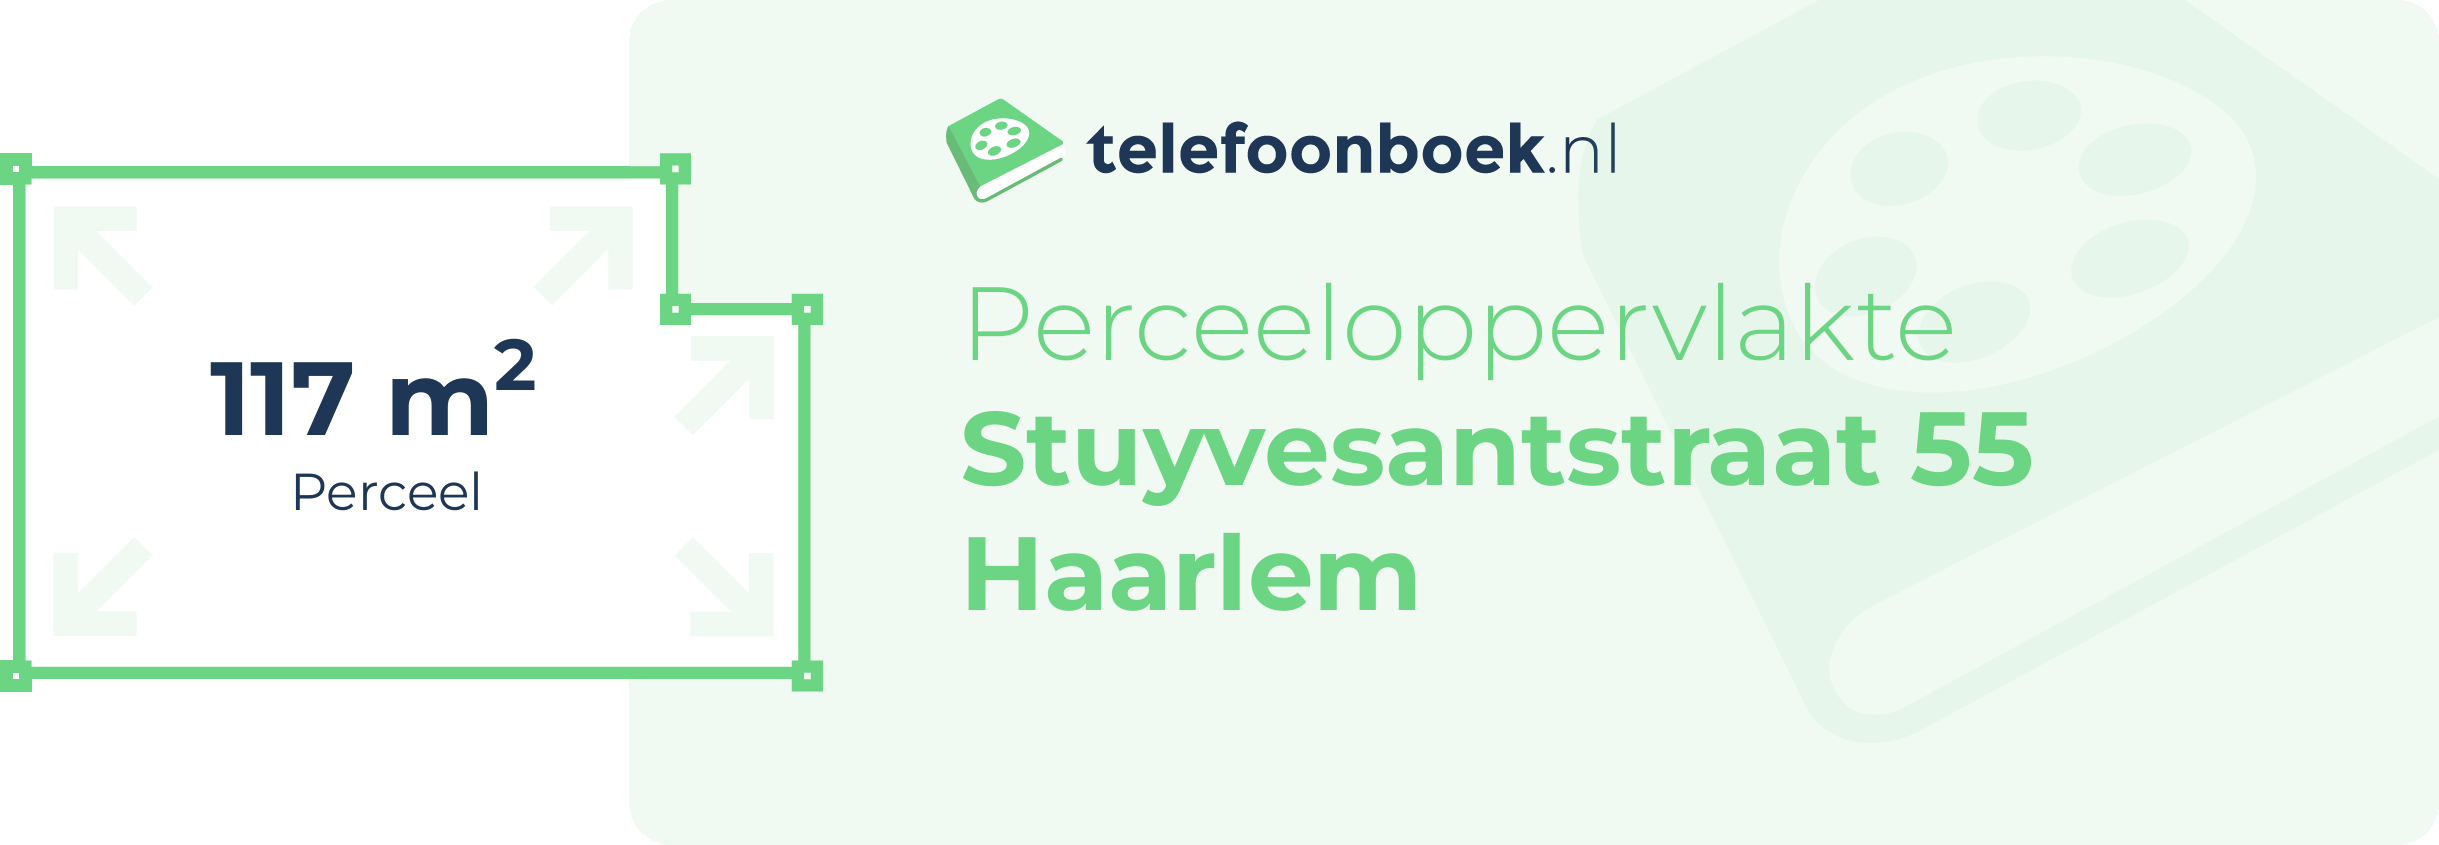 Perceeloppervlakte Stuyvesantstraat 55 Haarlem